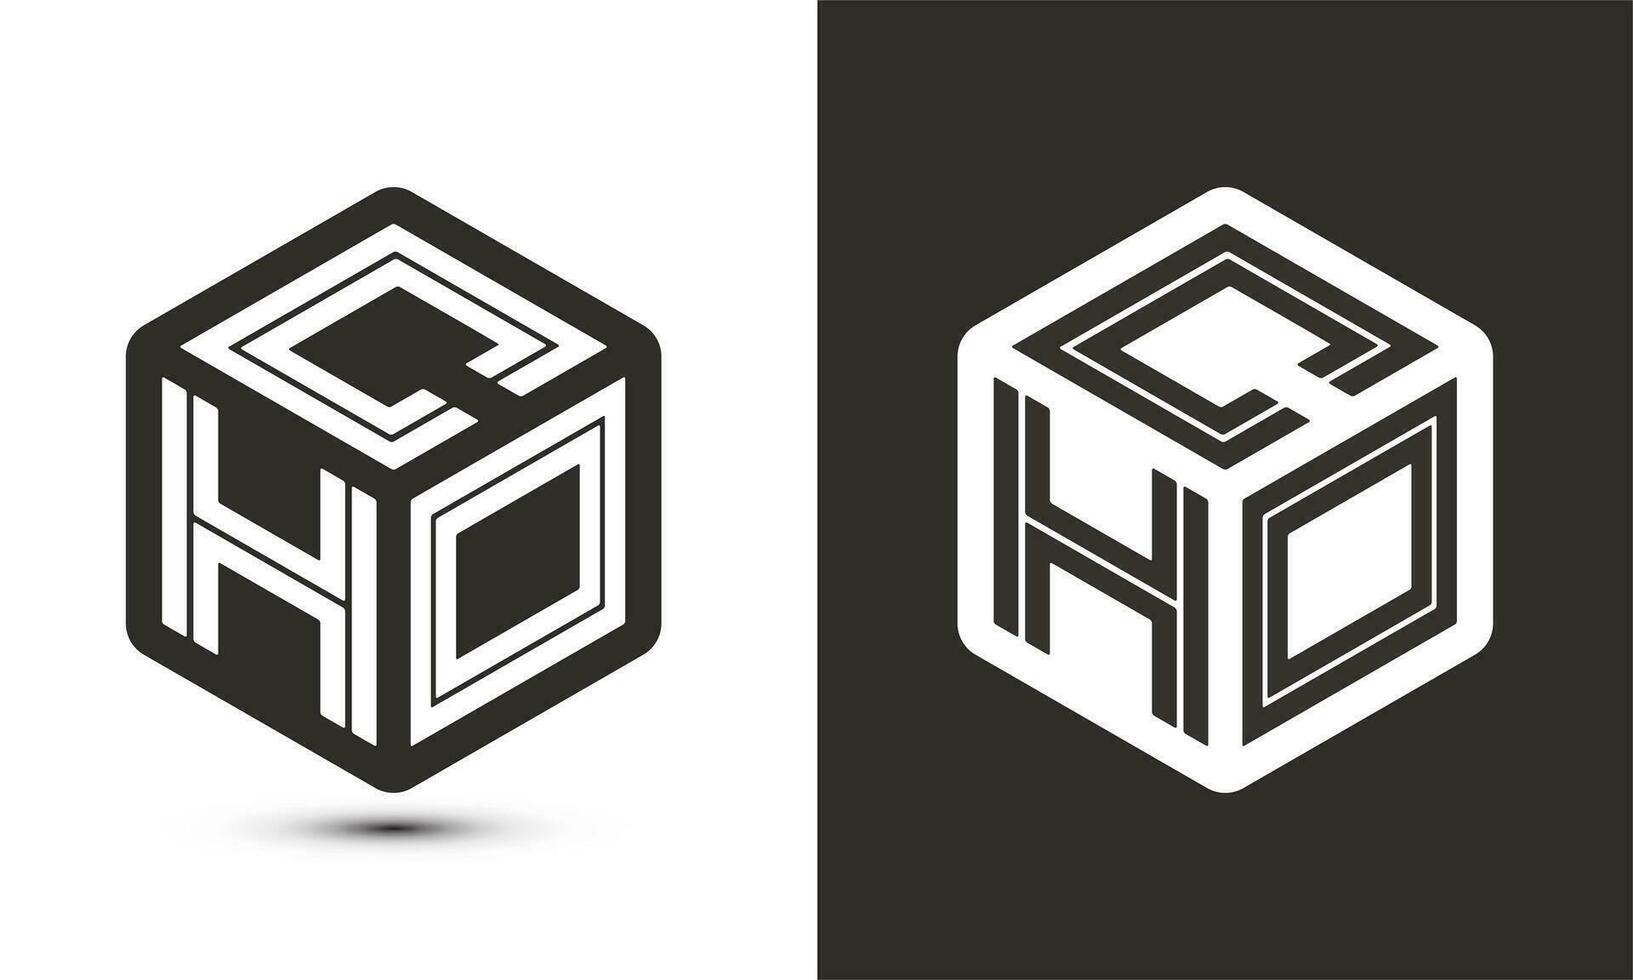 cho letra logo diseño con ilustrador cubo logo, vector logo moderno alfabeto fuente superposición estilo.